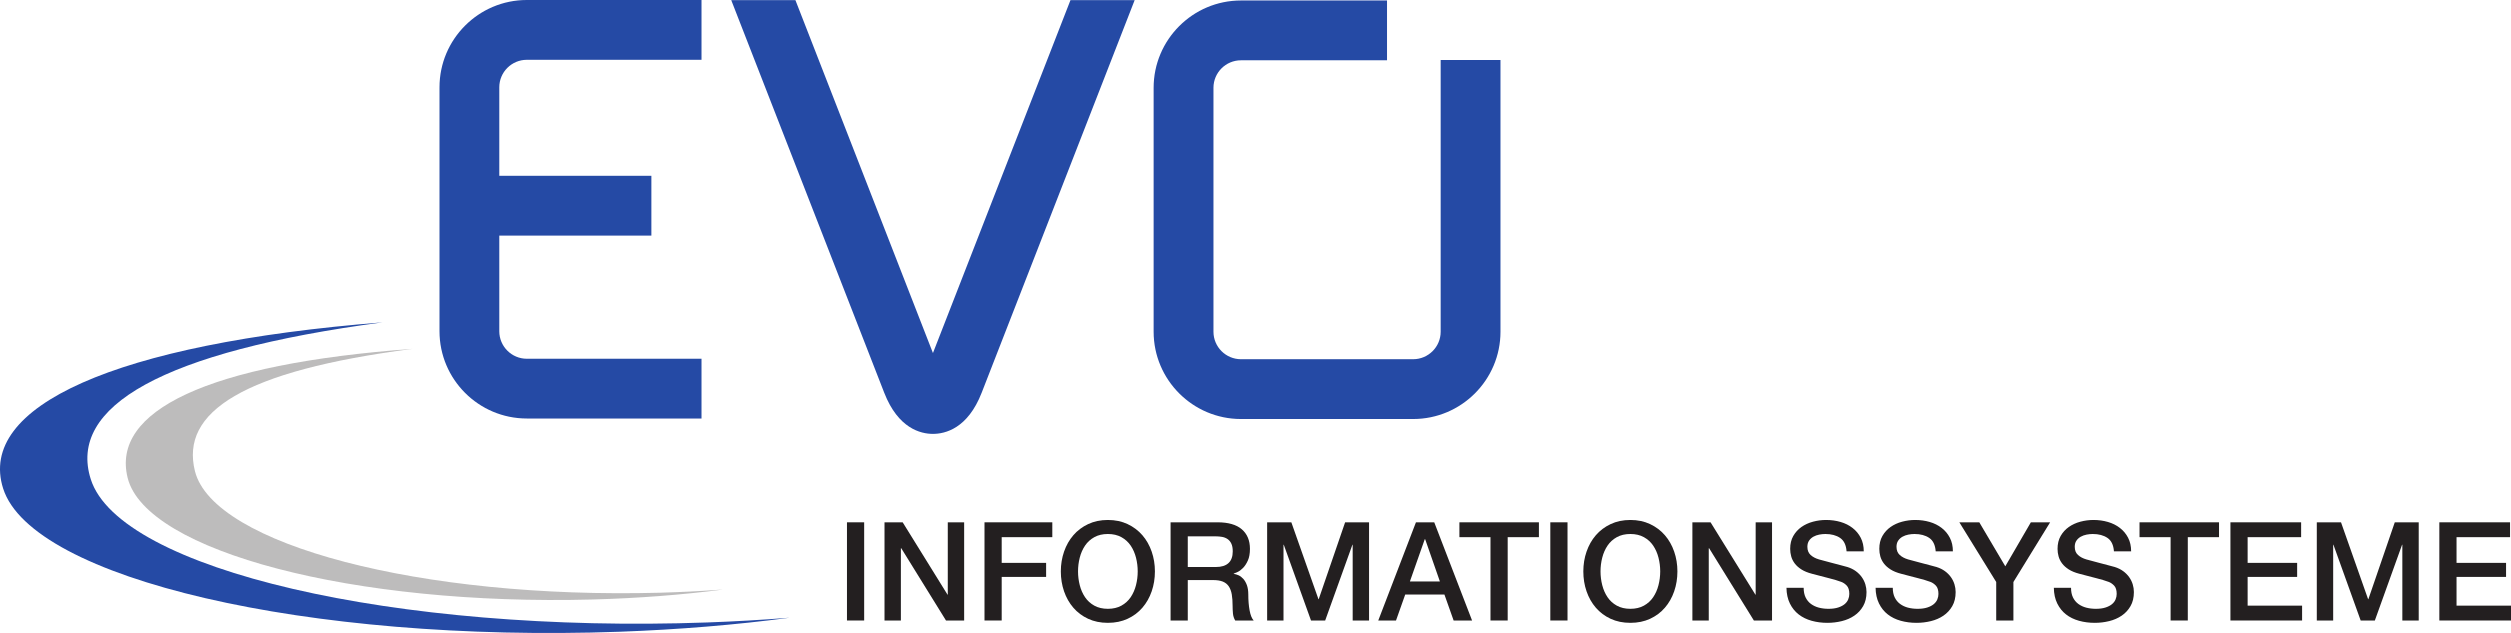 EVO Informationssysteme GmbH